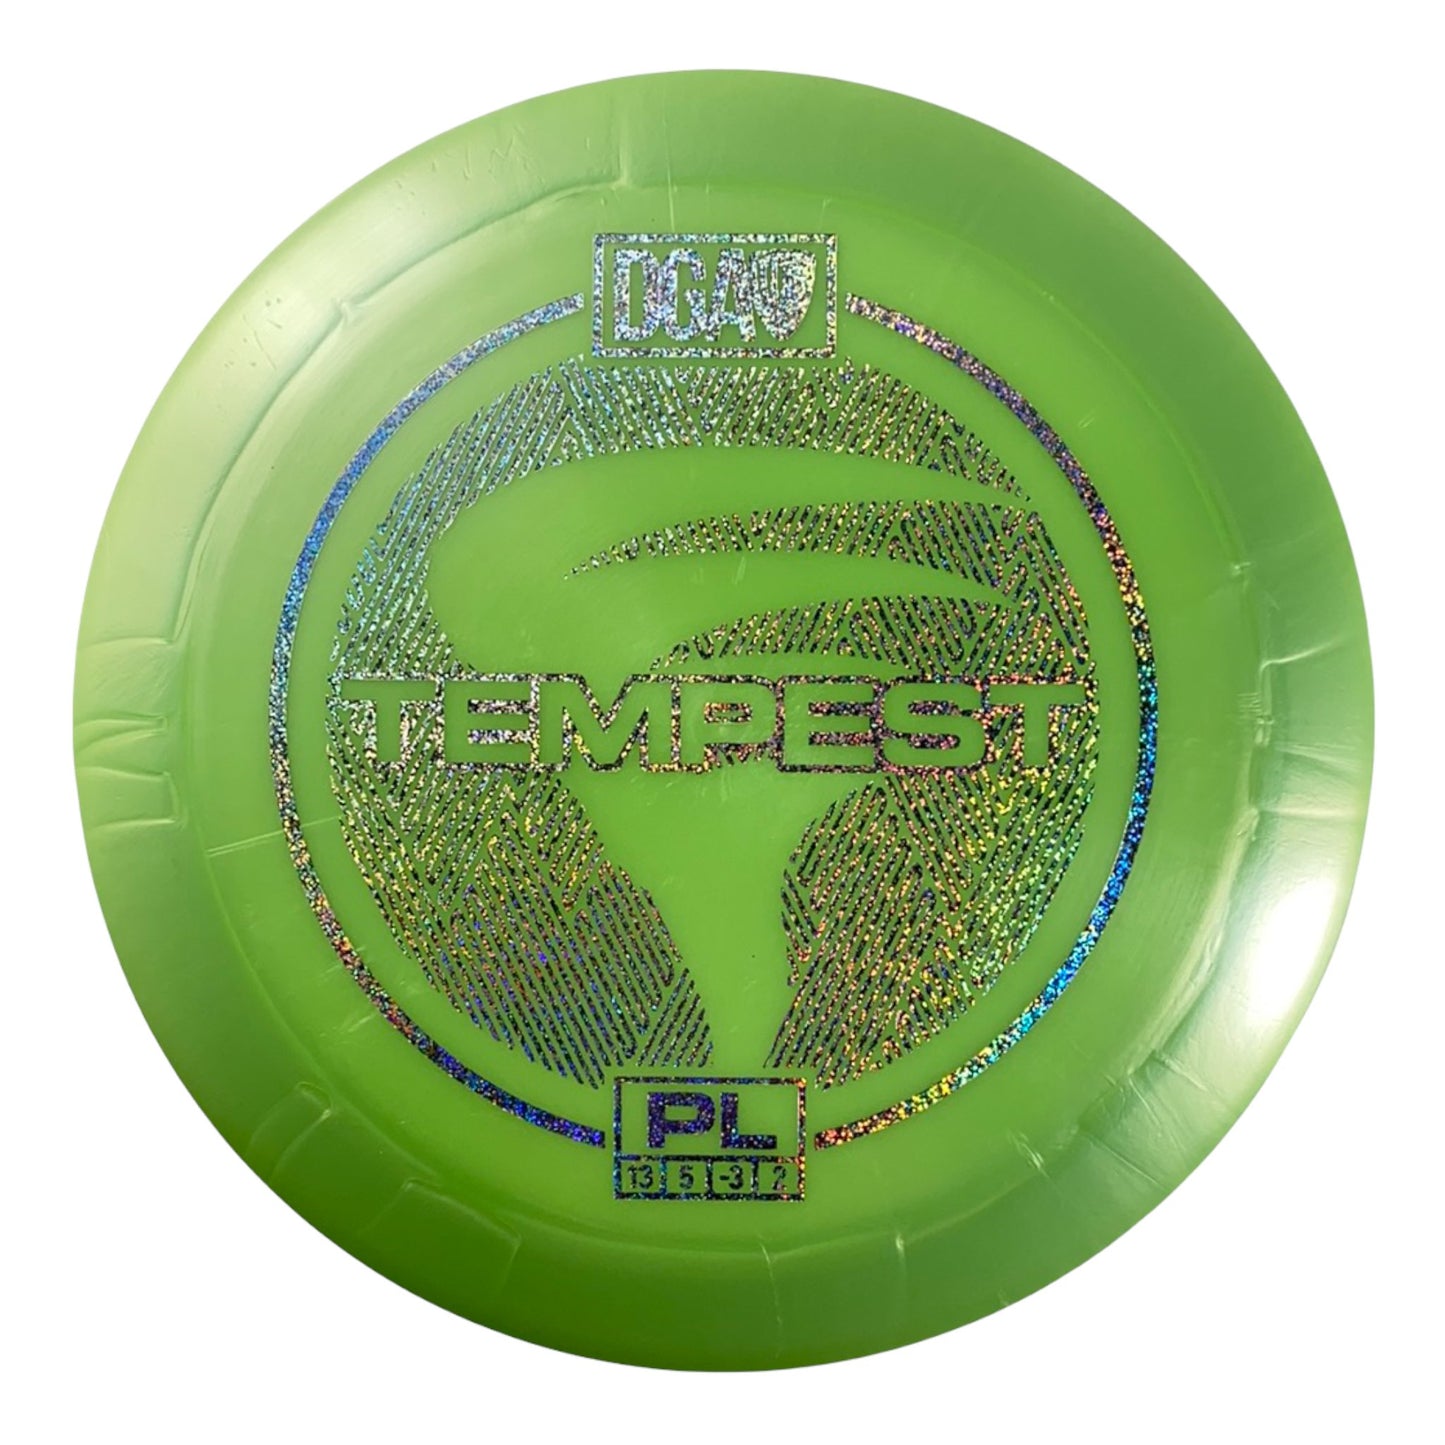 DGA Tempest | PL | Green/Holo 174g Disc Golf